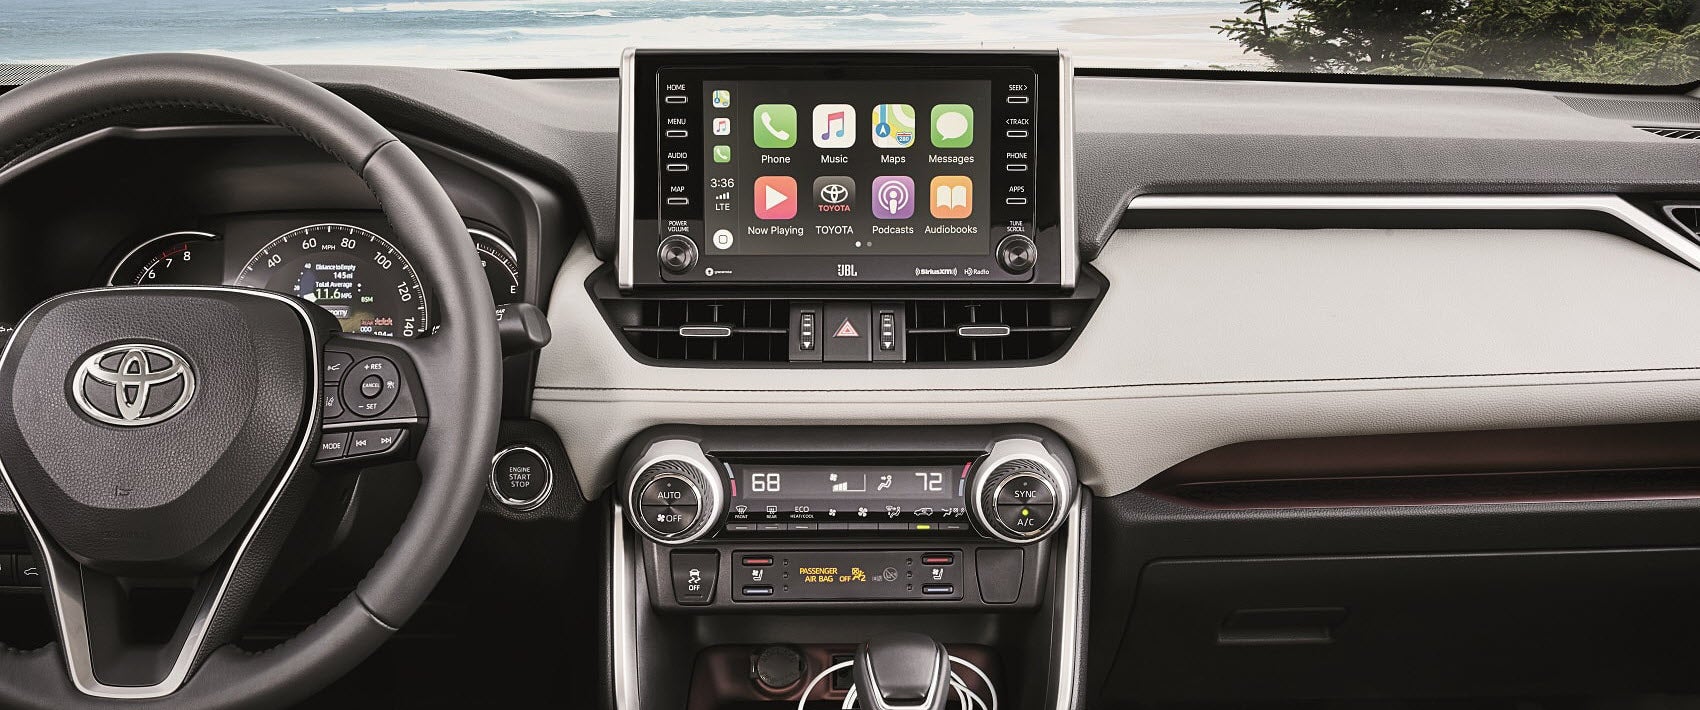 Toyota RAV4 Interior with Apple CarPlay® Technology